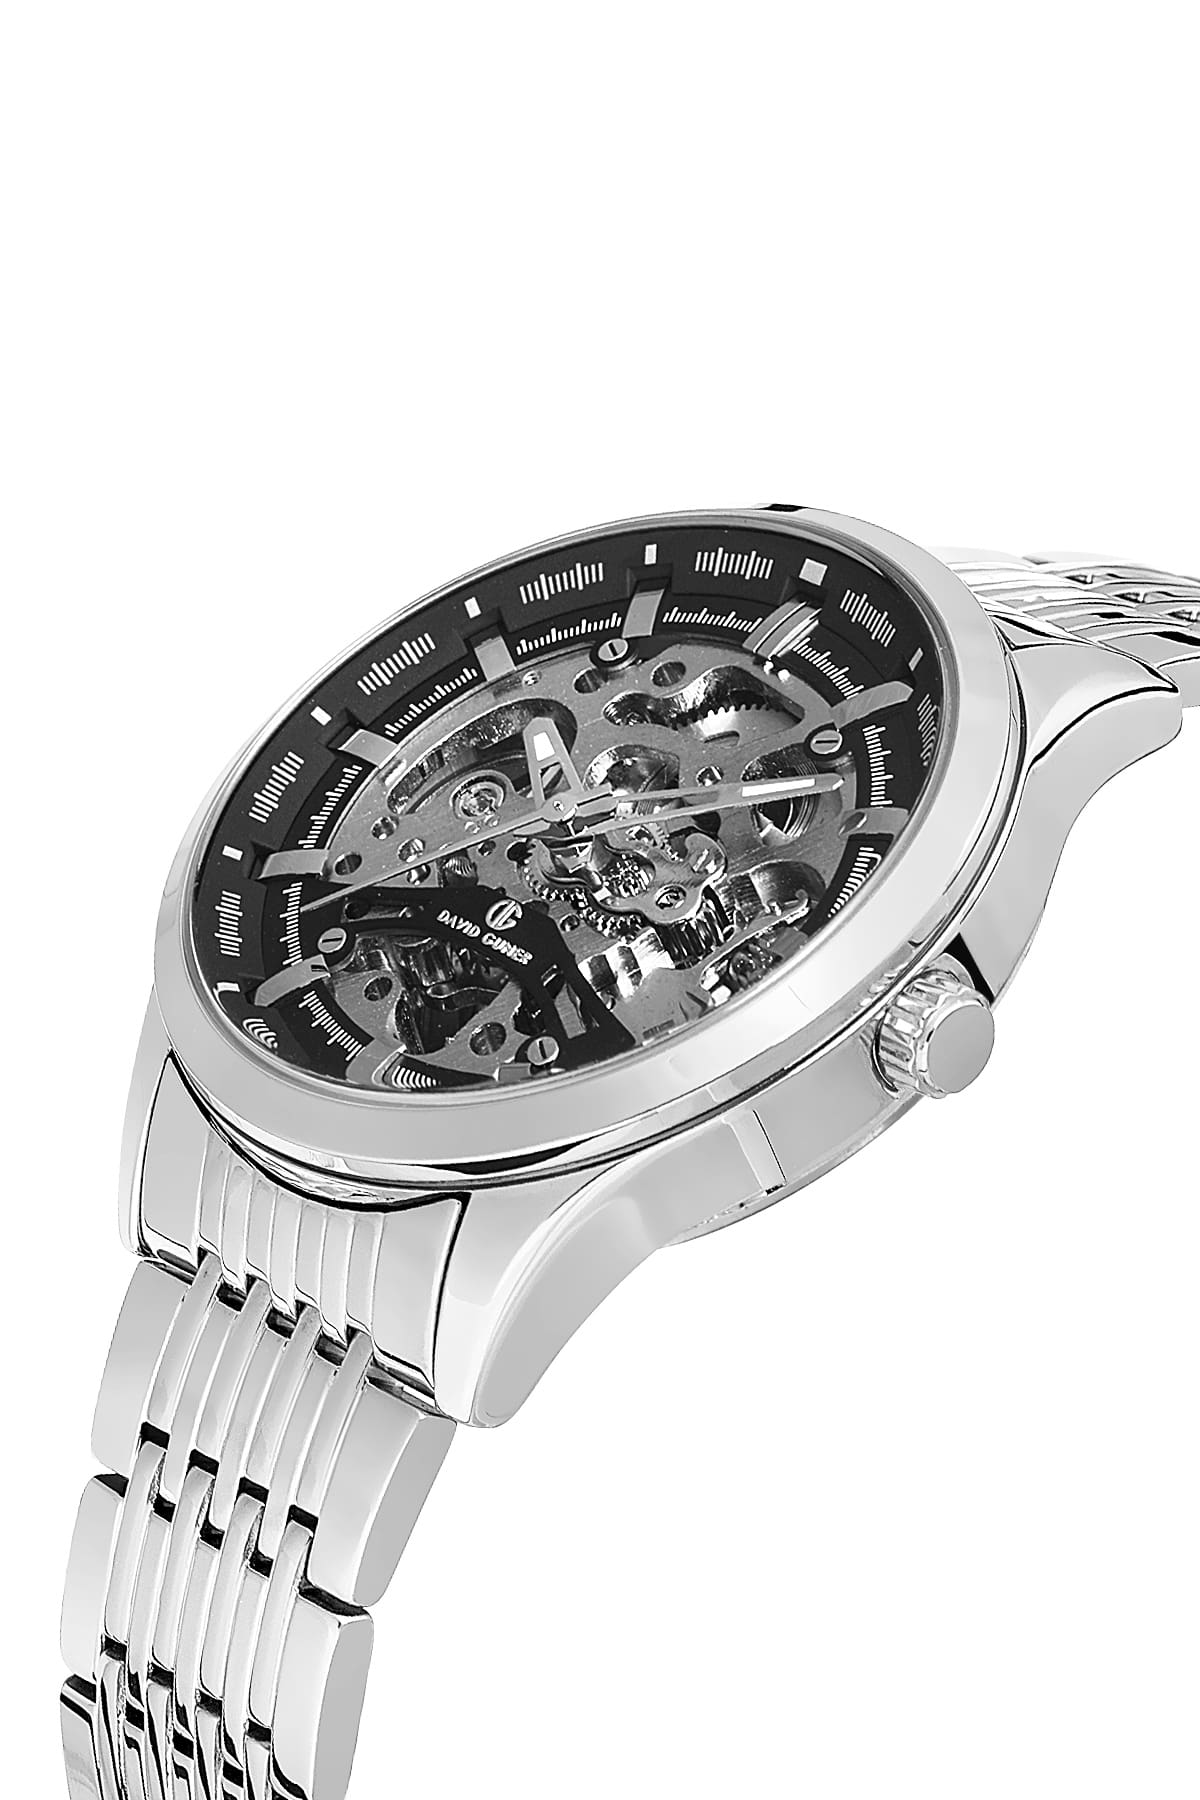 DAVID GUNER Black Dial Silver Plated Automatic Function Men's Wristwatch